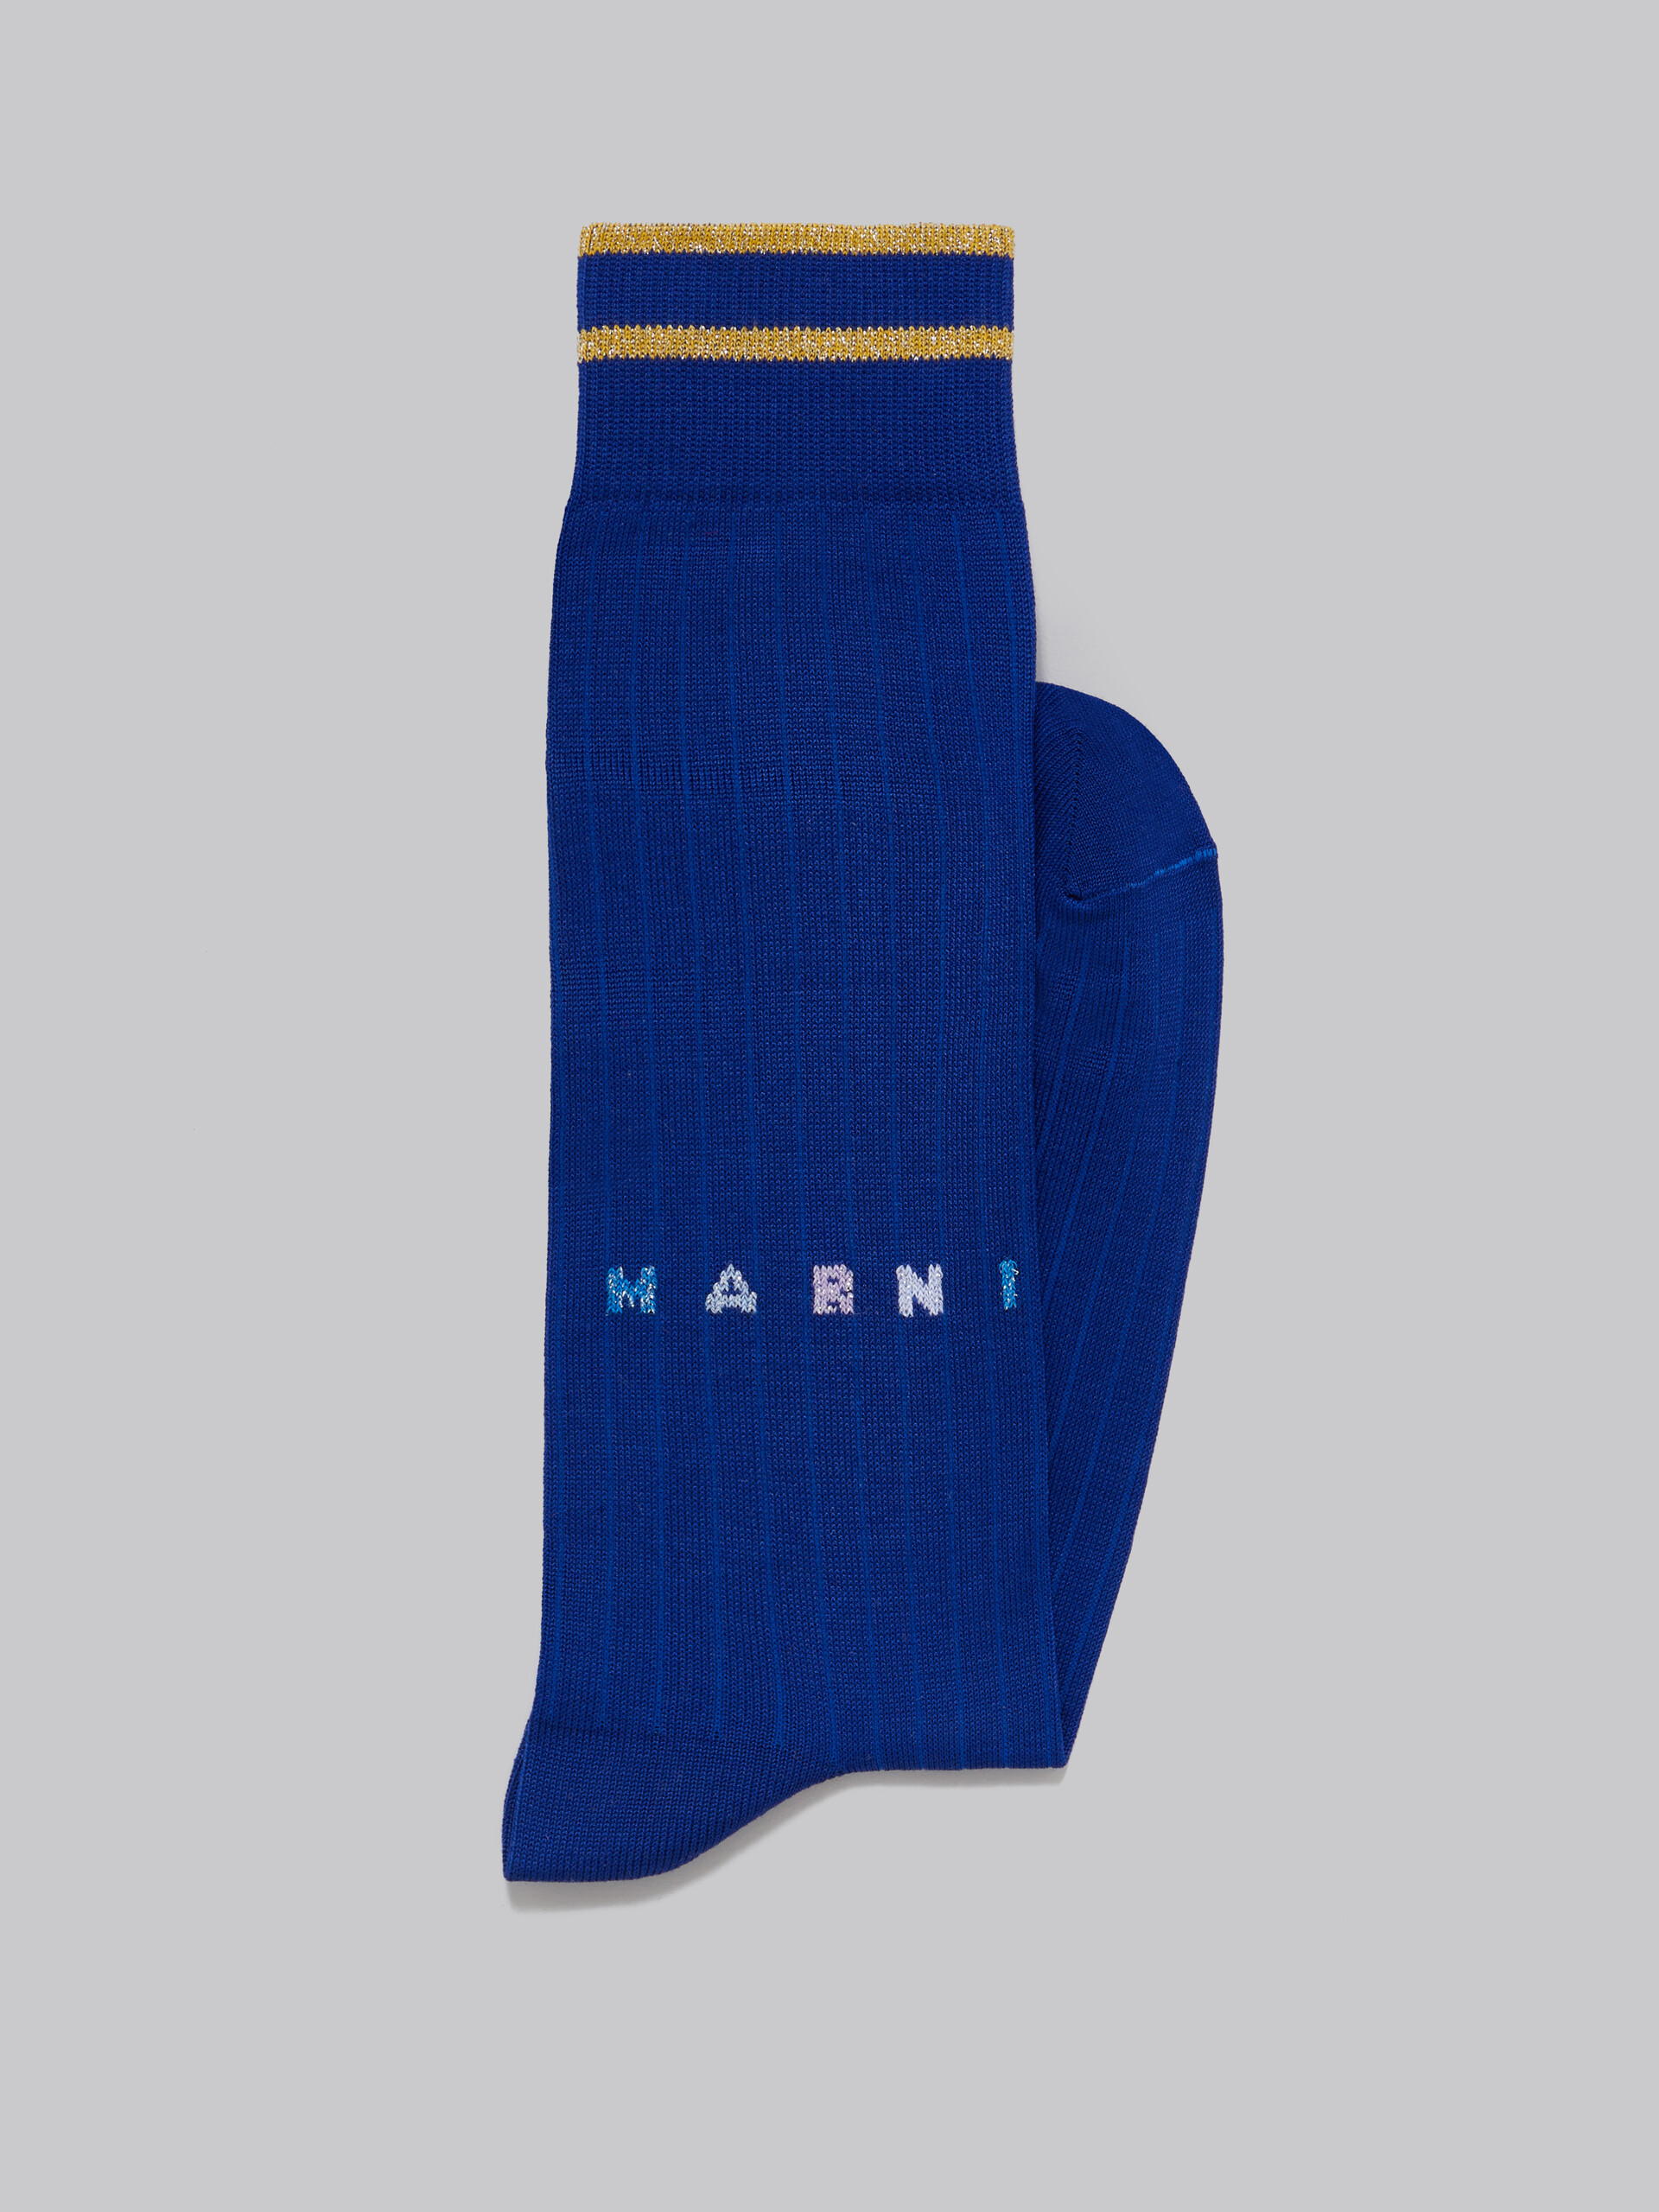 Blue cotton socks with Lurex logo - Socks - Image 2